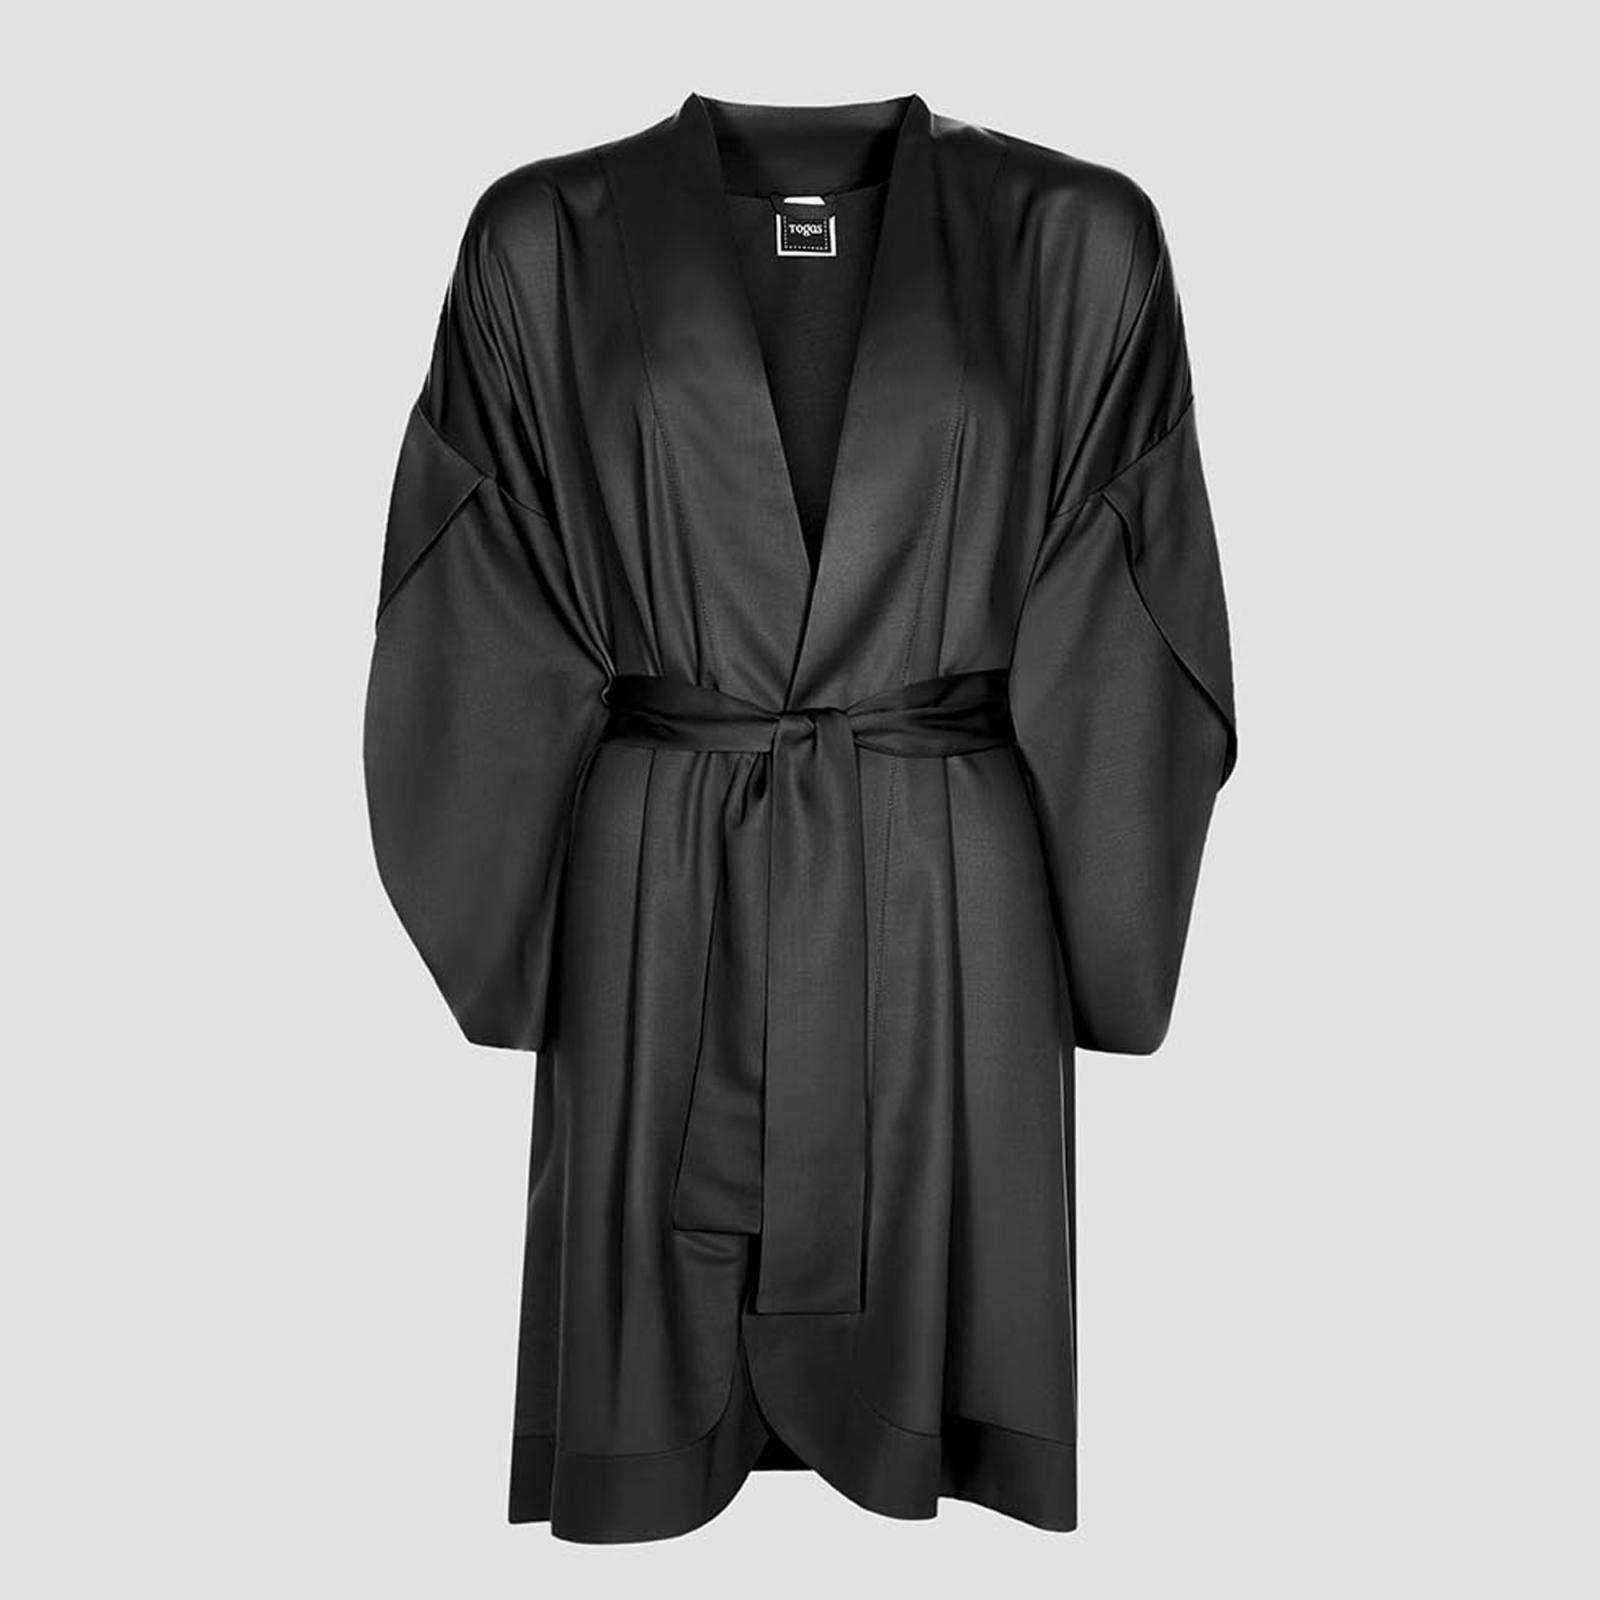 Халат-кимоно короткое Togas Наоми чёрное М (46) халат кимоно togas наоми зеленый xl 50